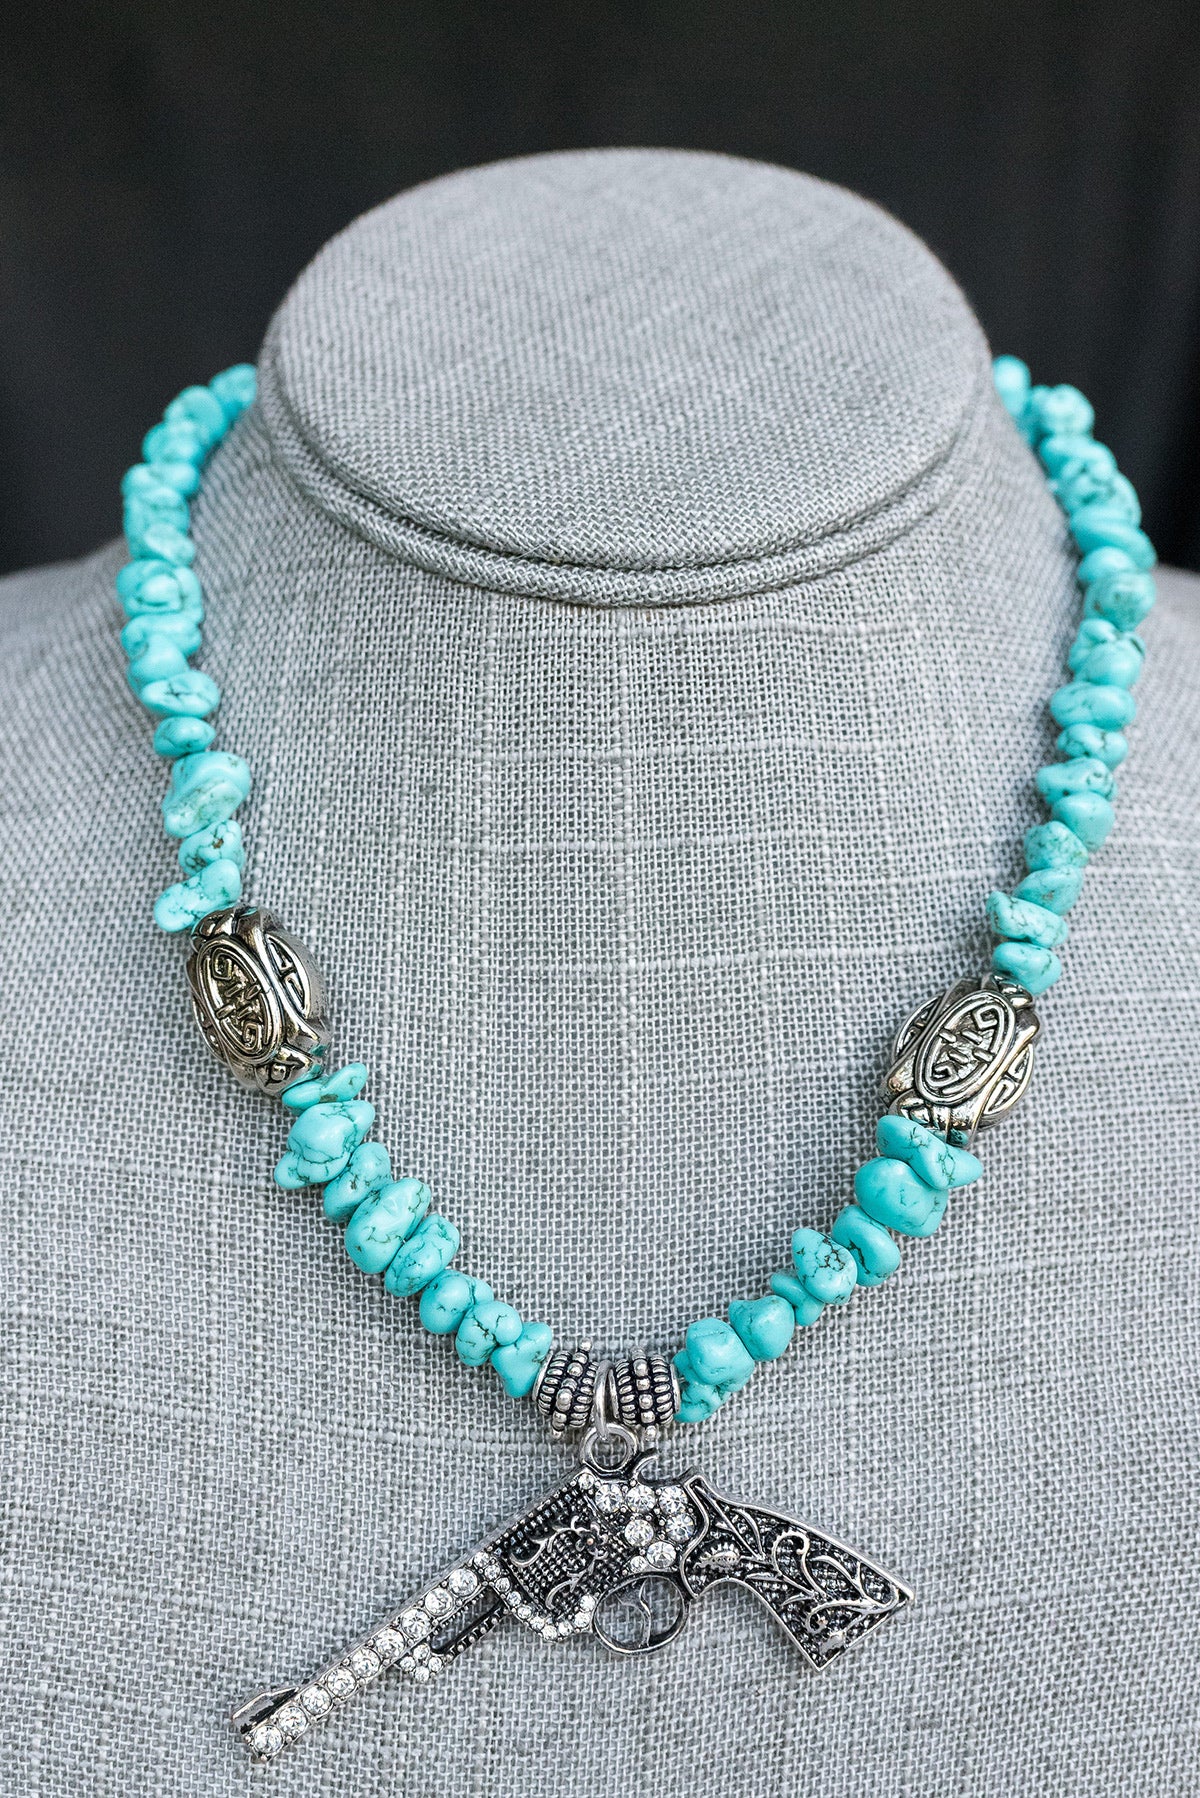 Turquoise Beaded Necklace with Rhinestone Pistol Pendant